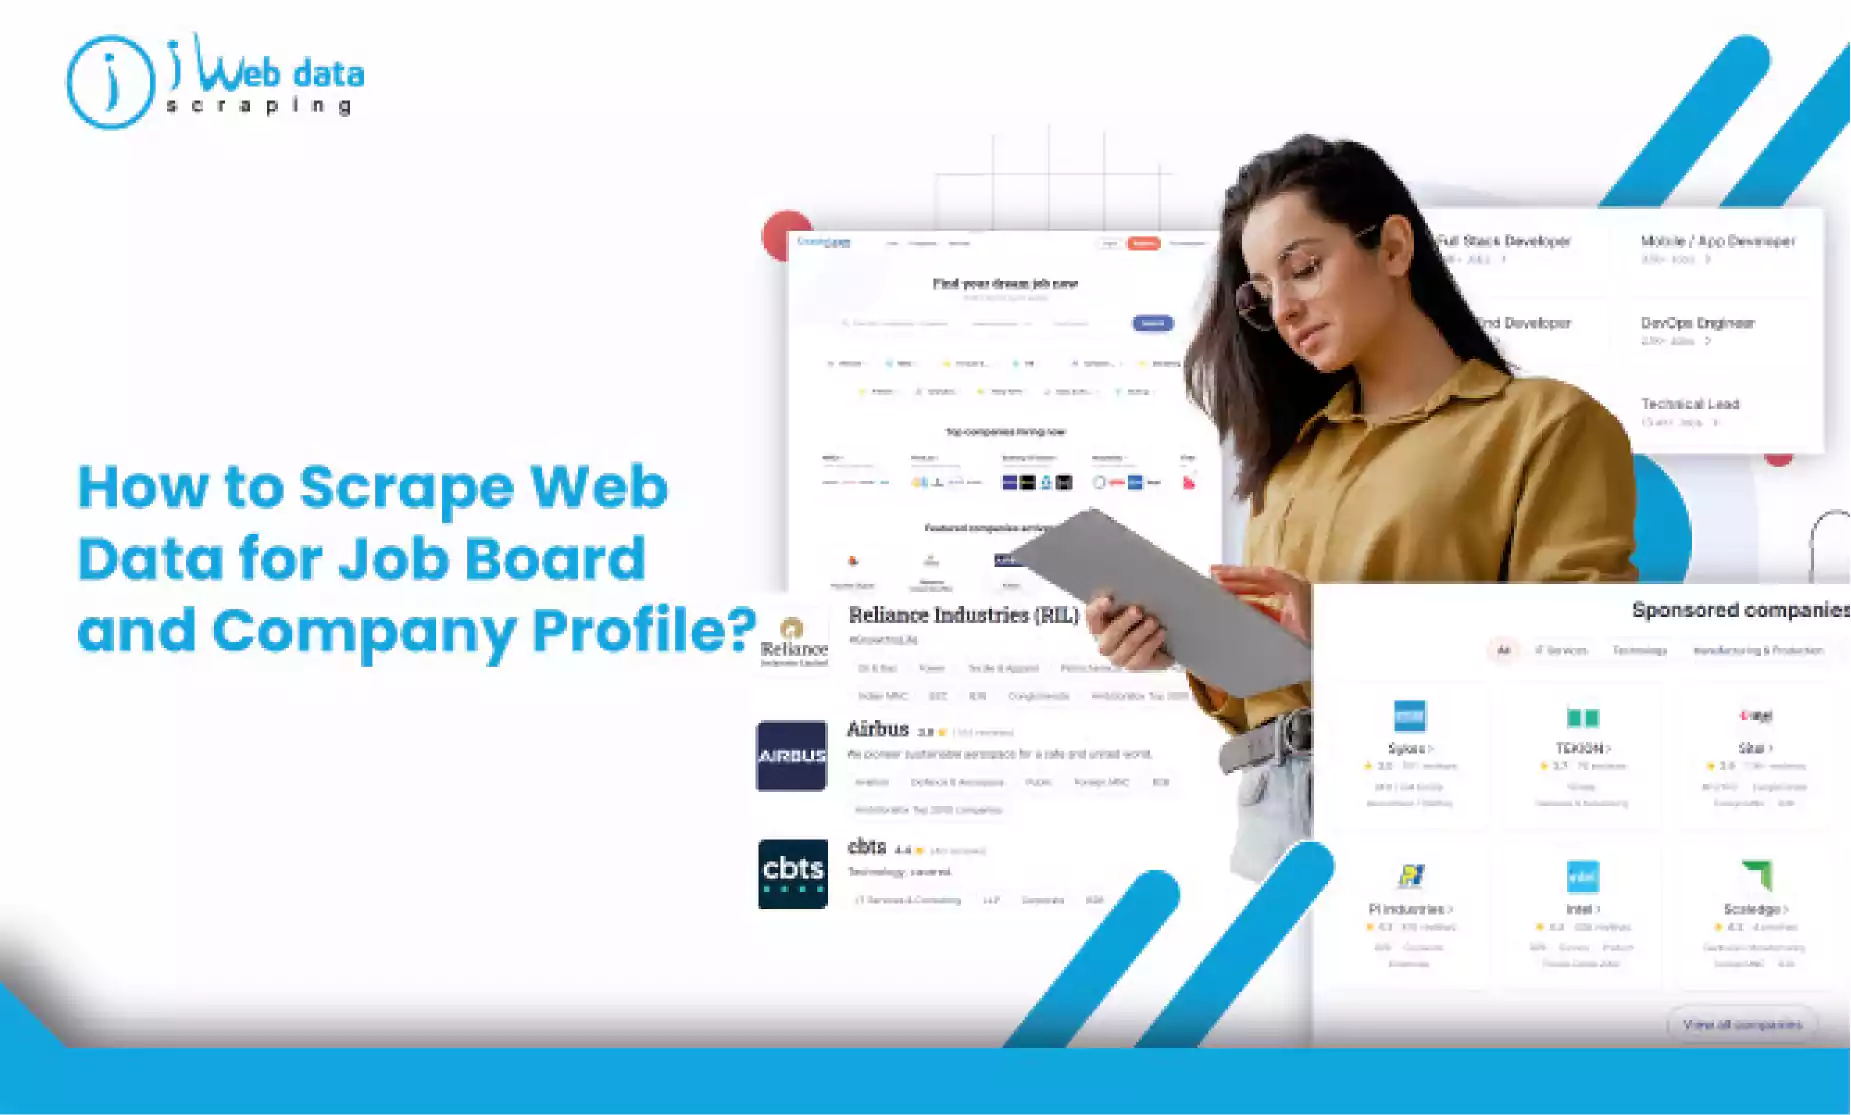 Thumb-Scraping-Job-boards-and-company-profiles-with-iWeb-Data.jpg